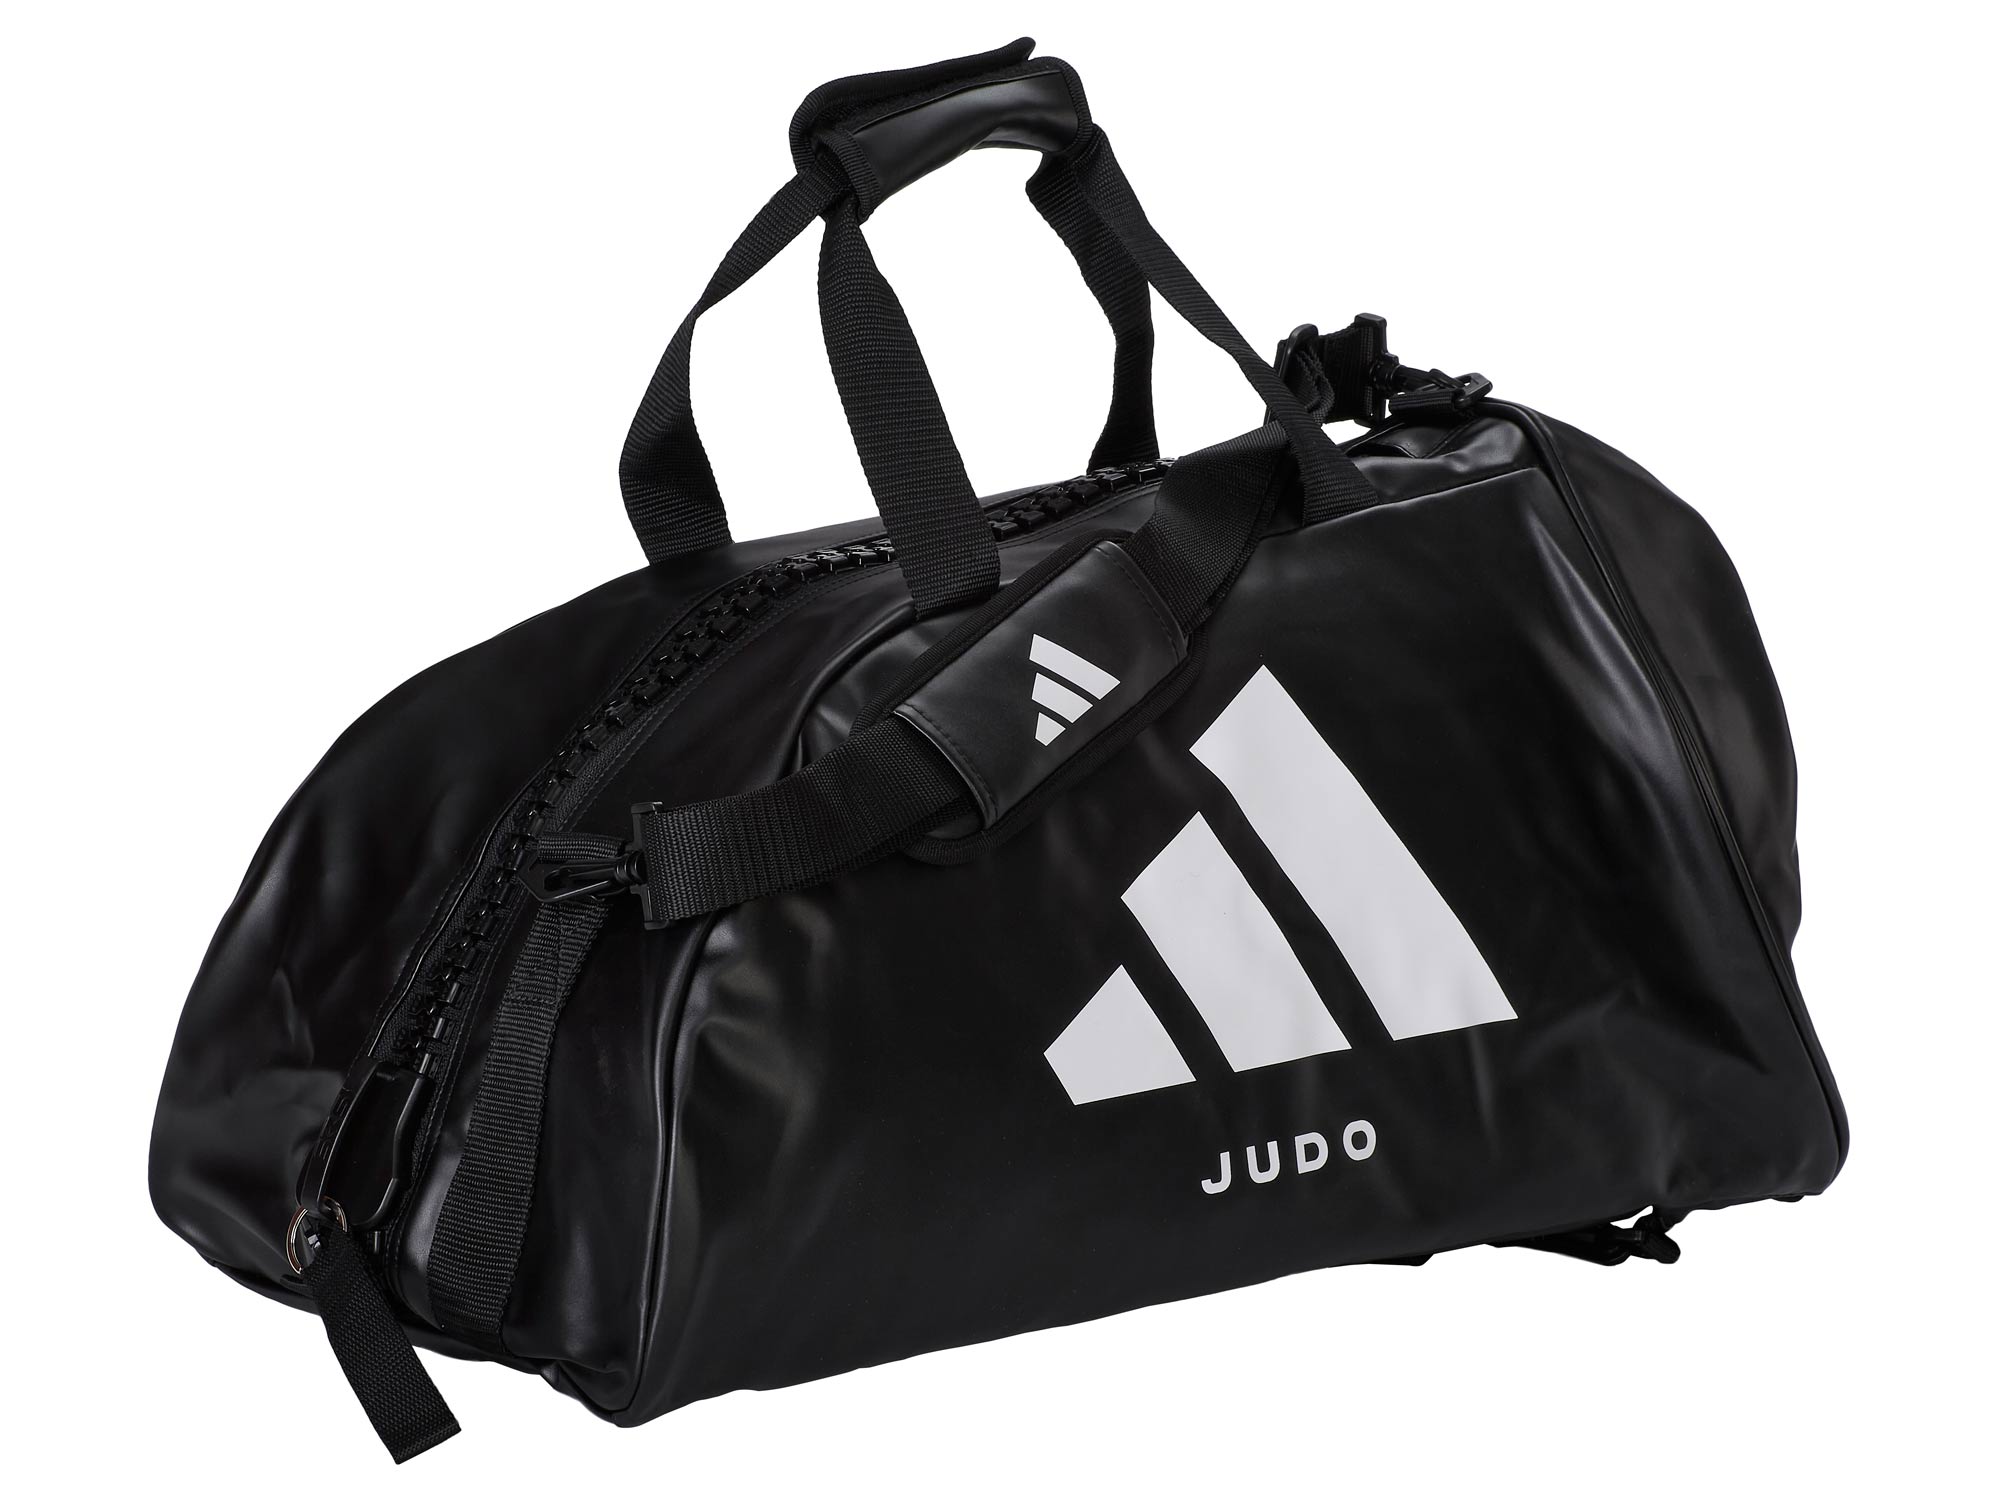 adidas 2in1 Bag "Judo" black/white PU L, adiACC051J